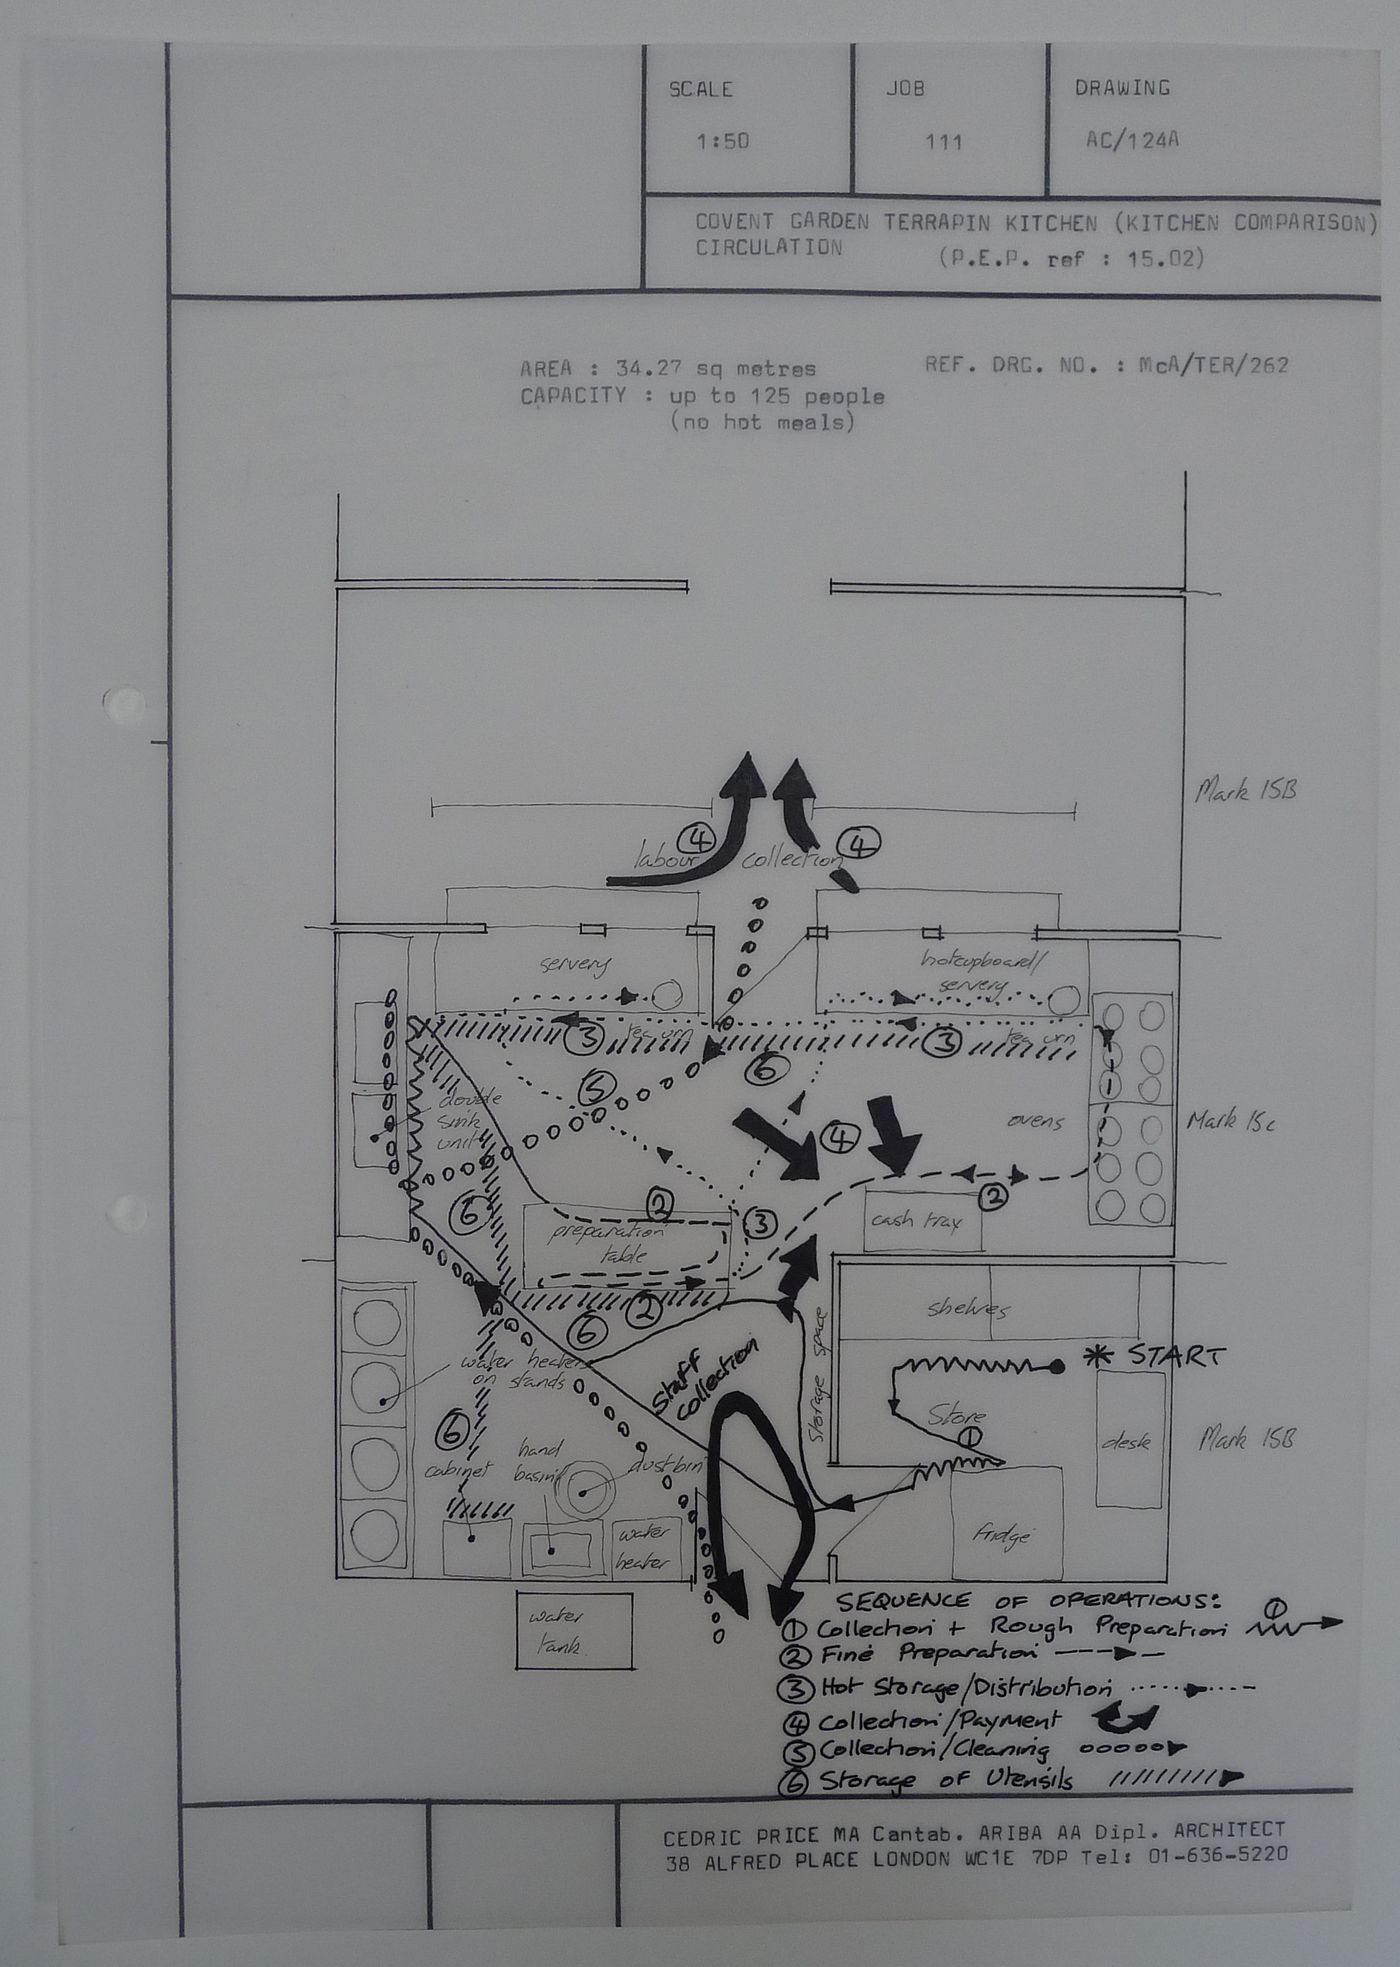 McAppy: diagram illustrating Covent Garden terrapin kitchen cirulation